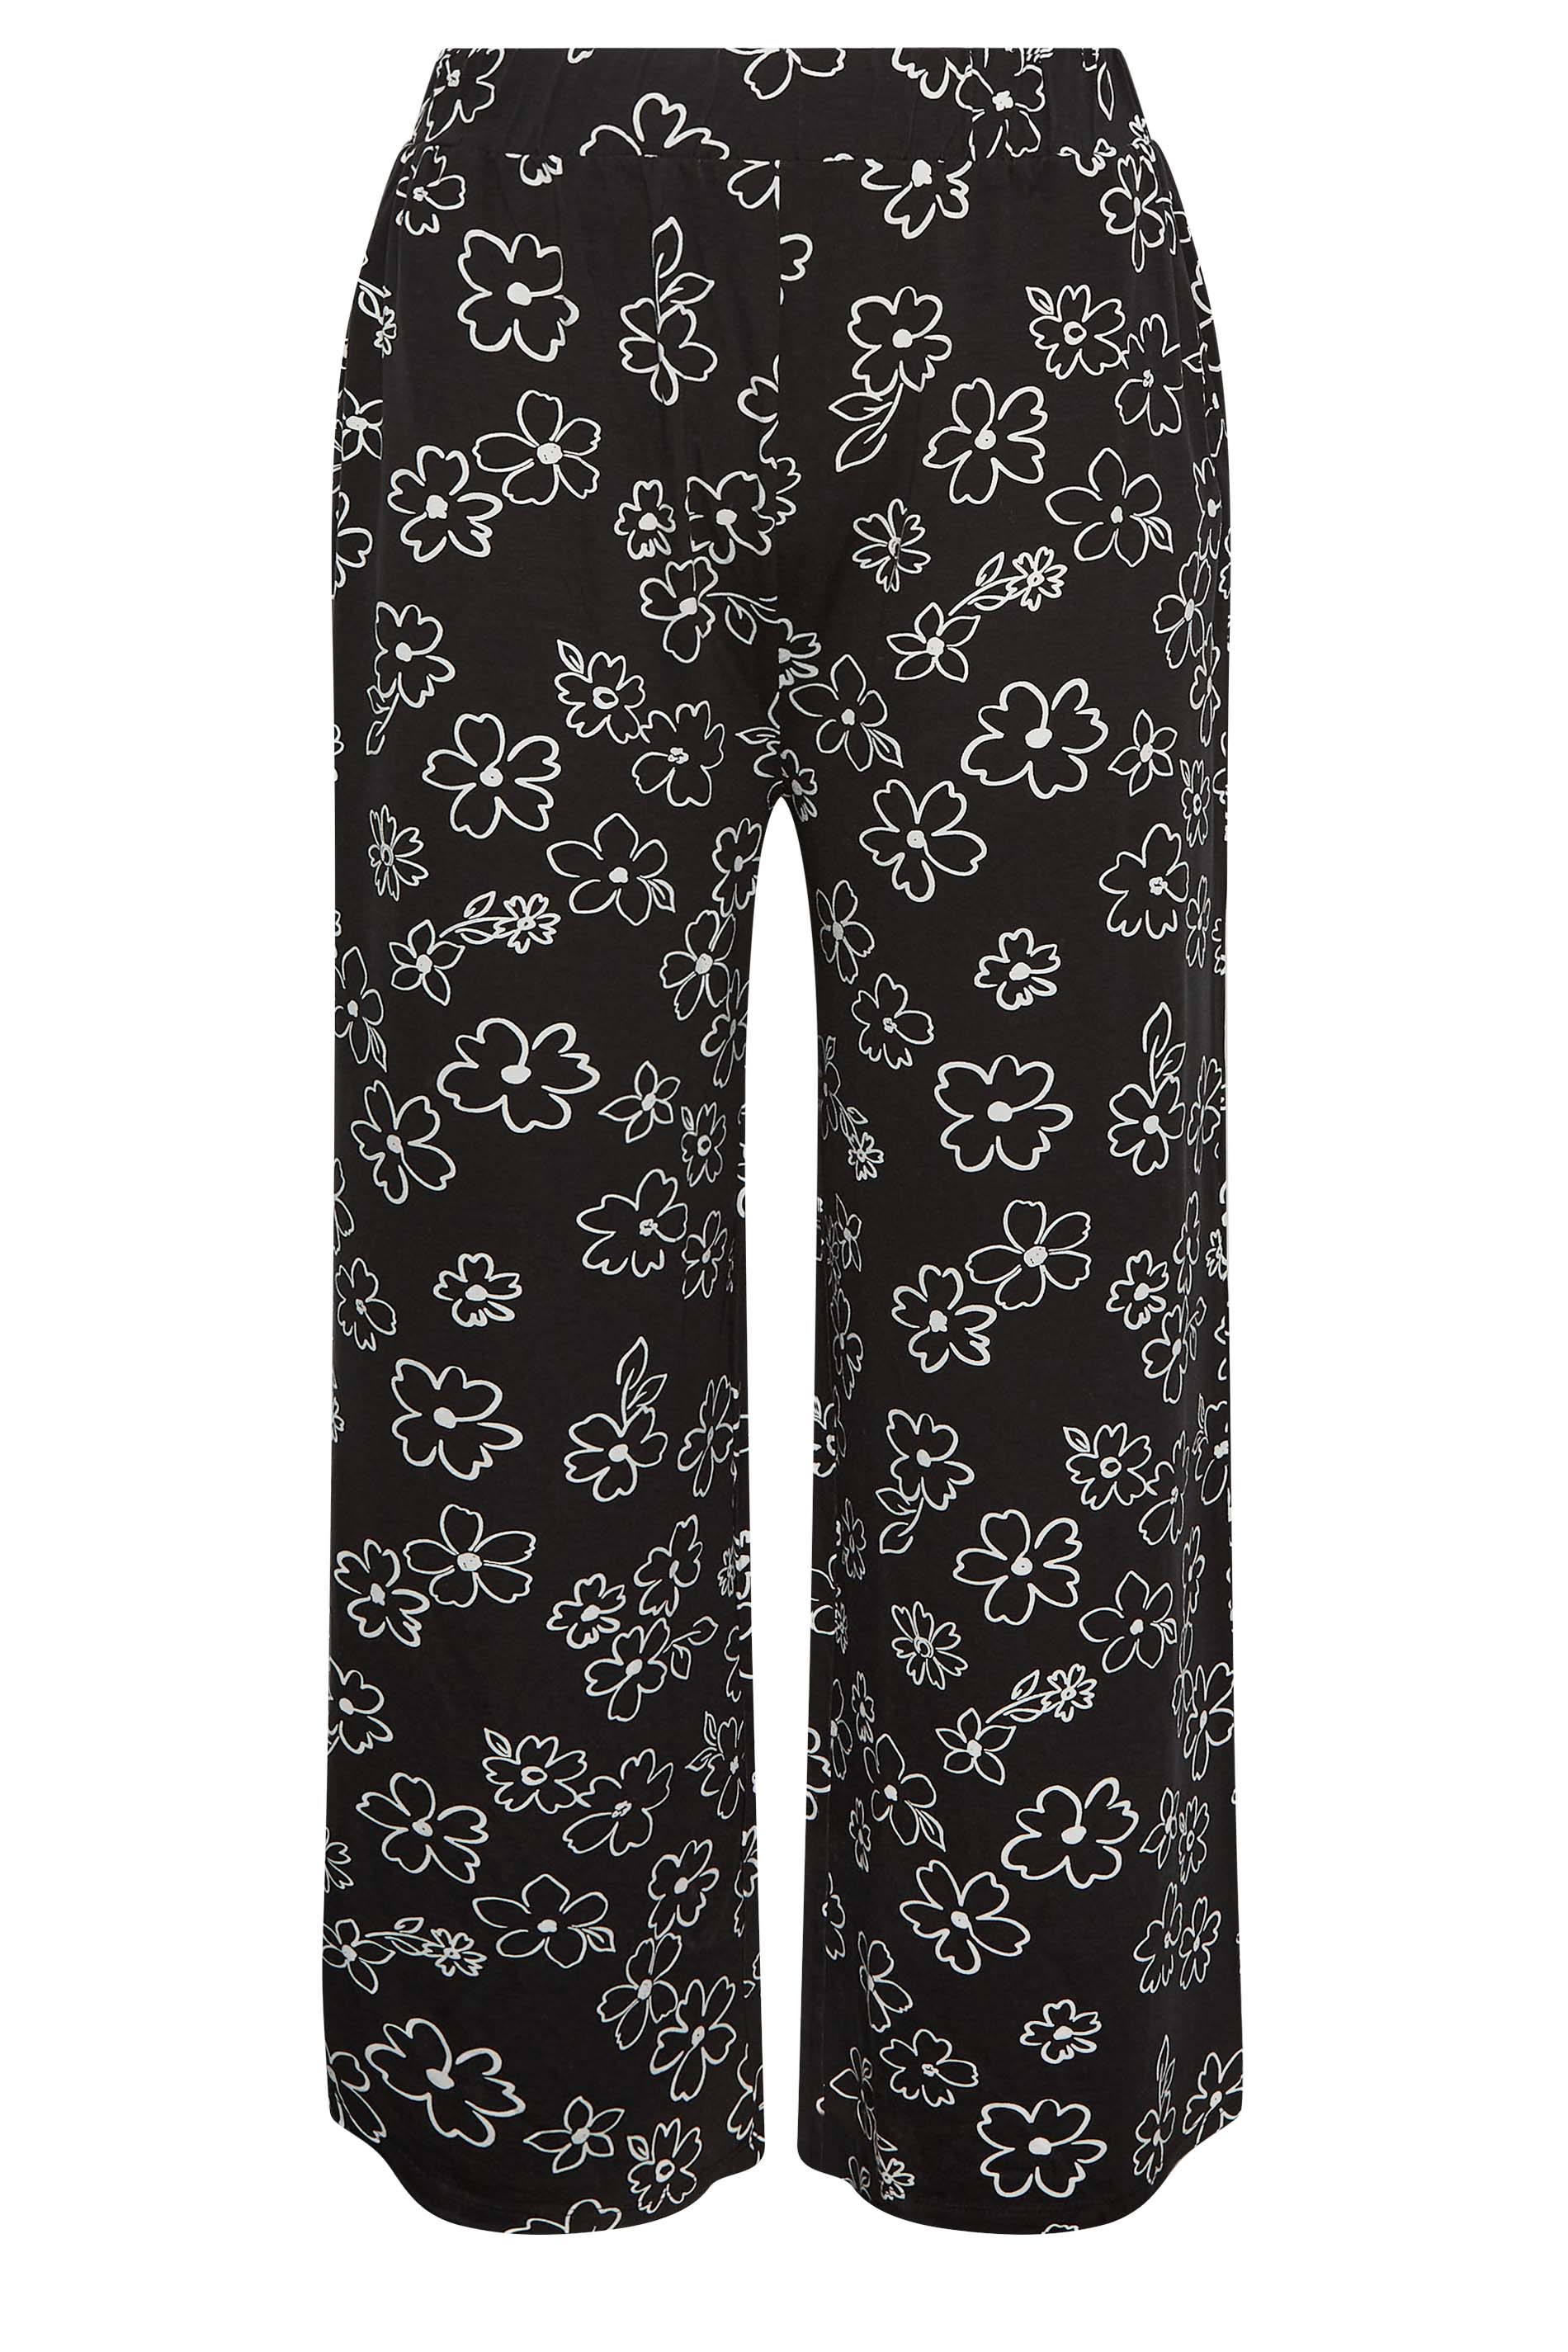 Sezane | Pants & Jumpsuits | Sezane Clara Trousers Floral Pattern Size |  Poshmark